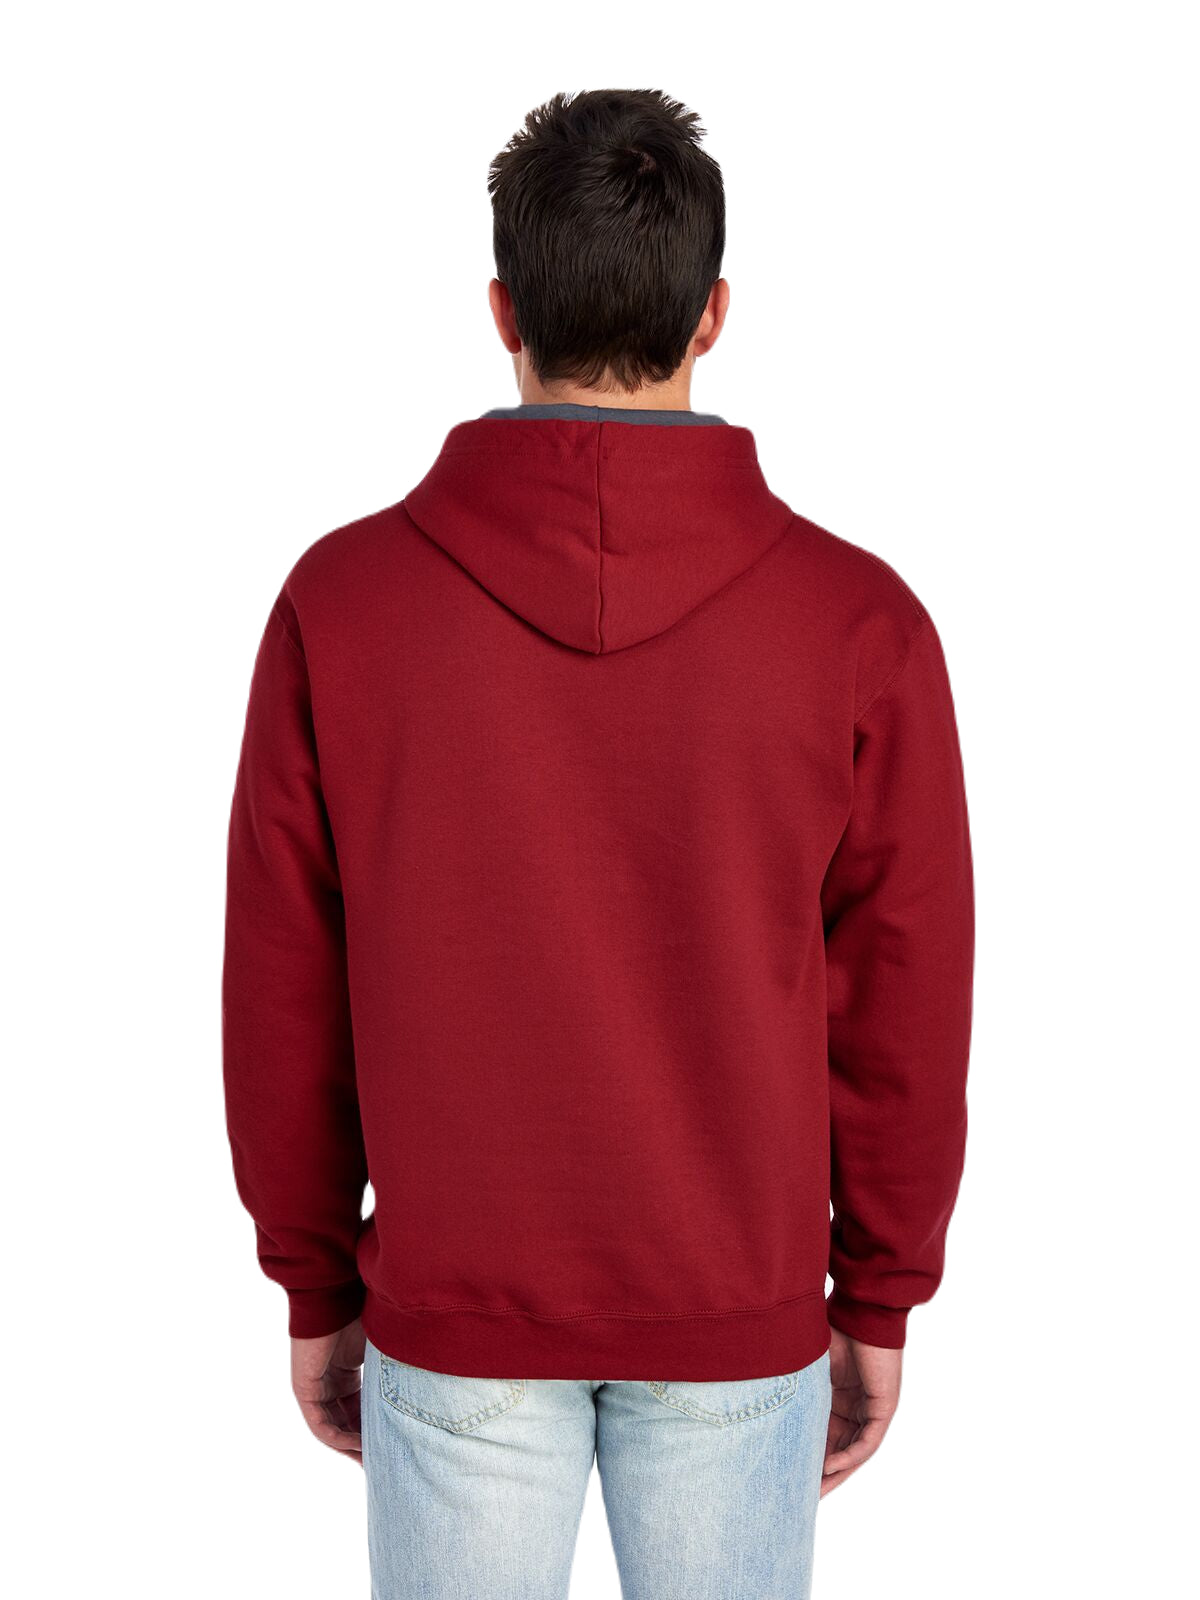 Adult Unisex 7.2 oz. SofSpun® Hooded Sweatshirt